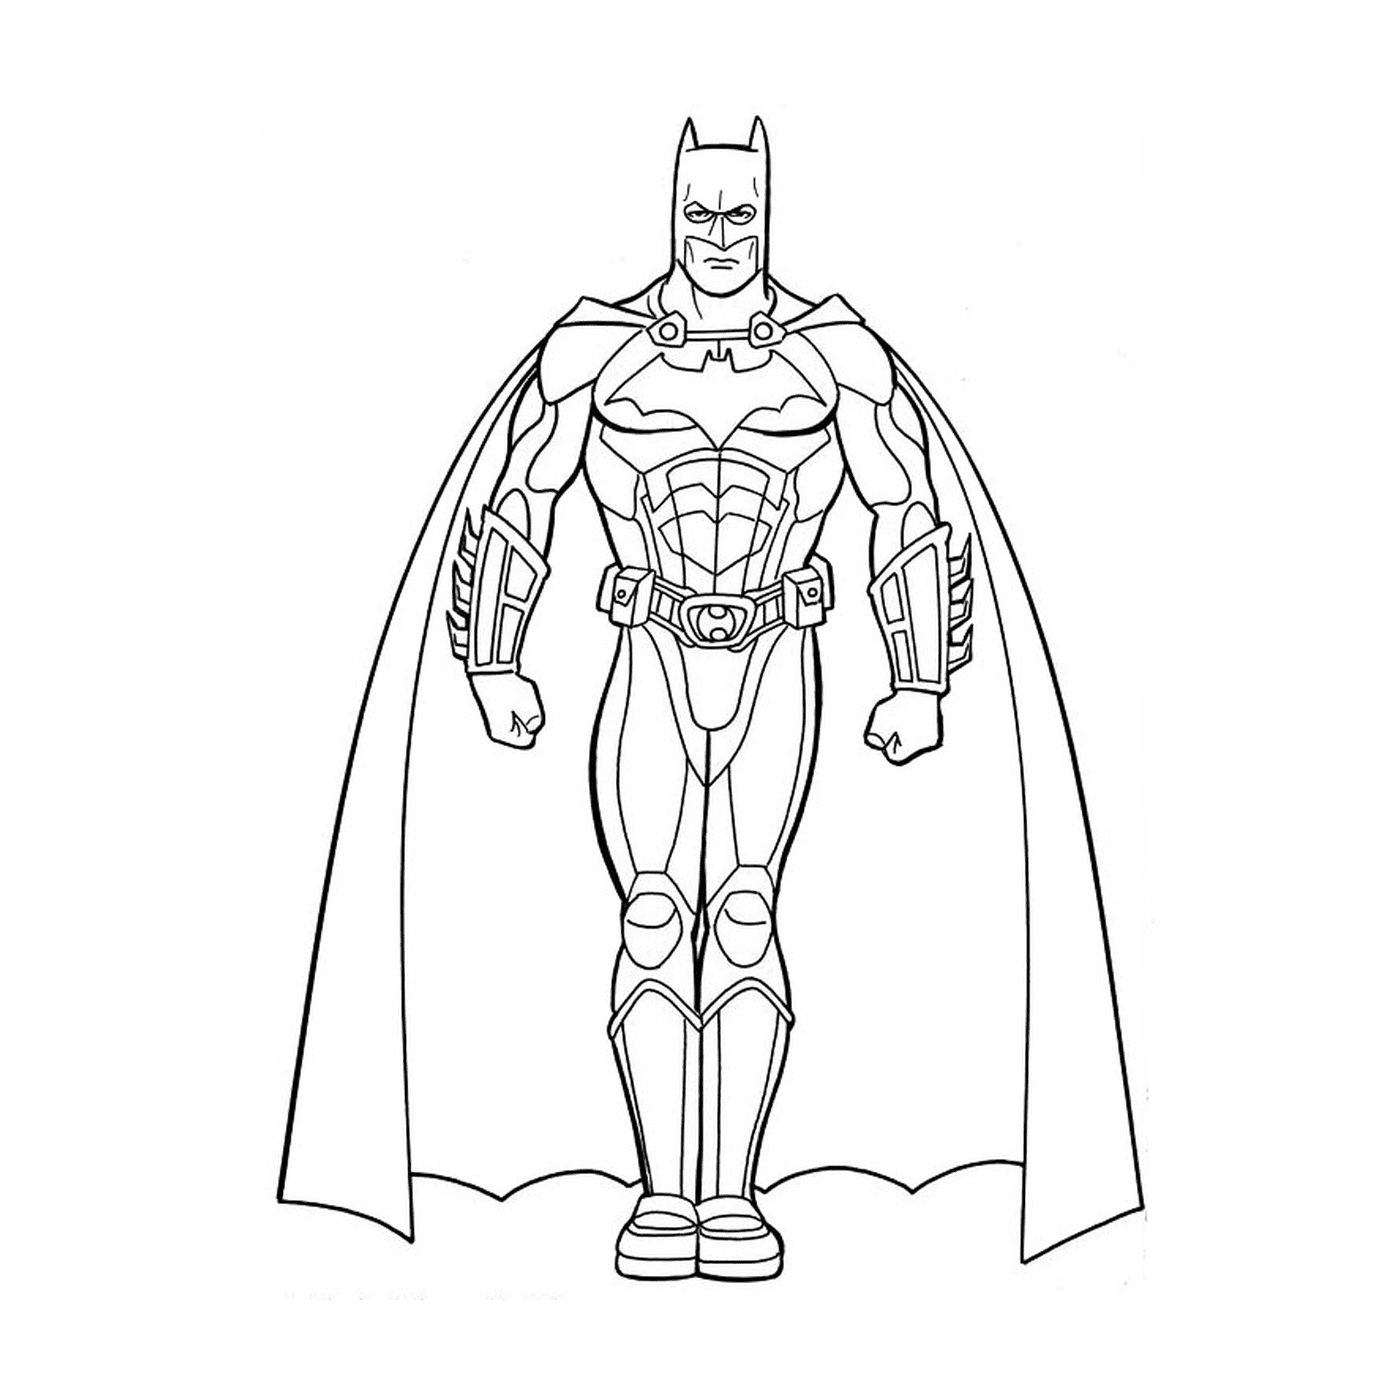  Uomo in costume di Batman 